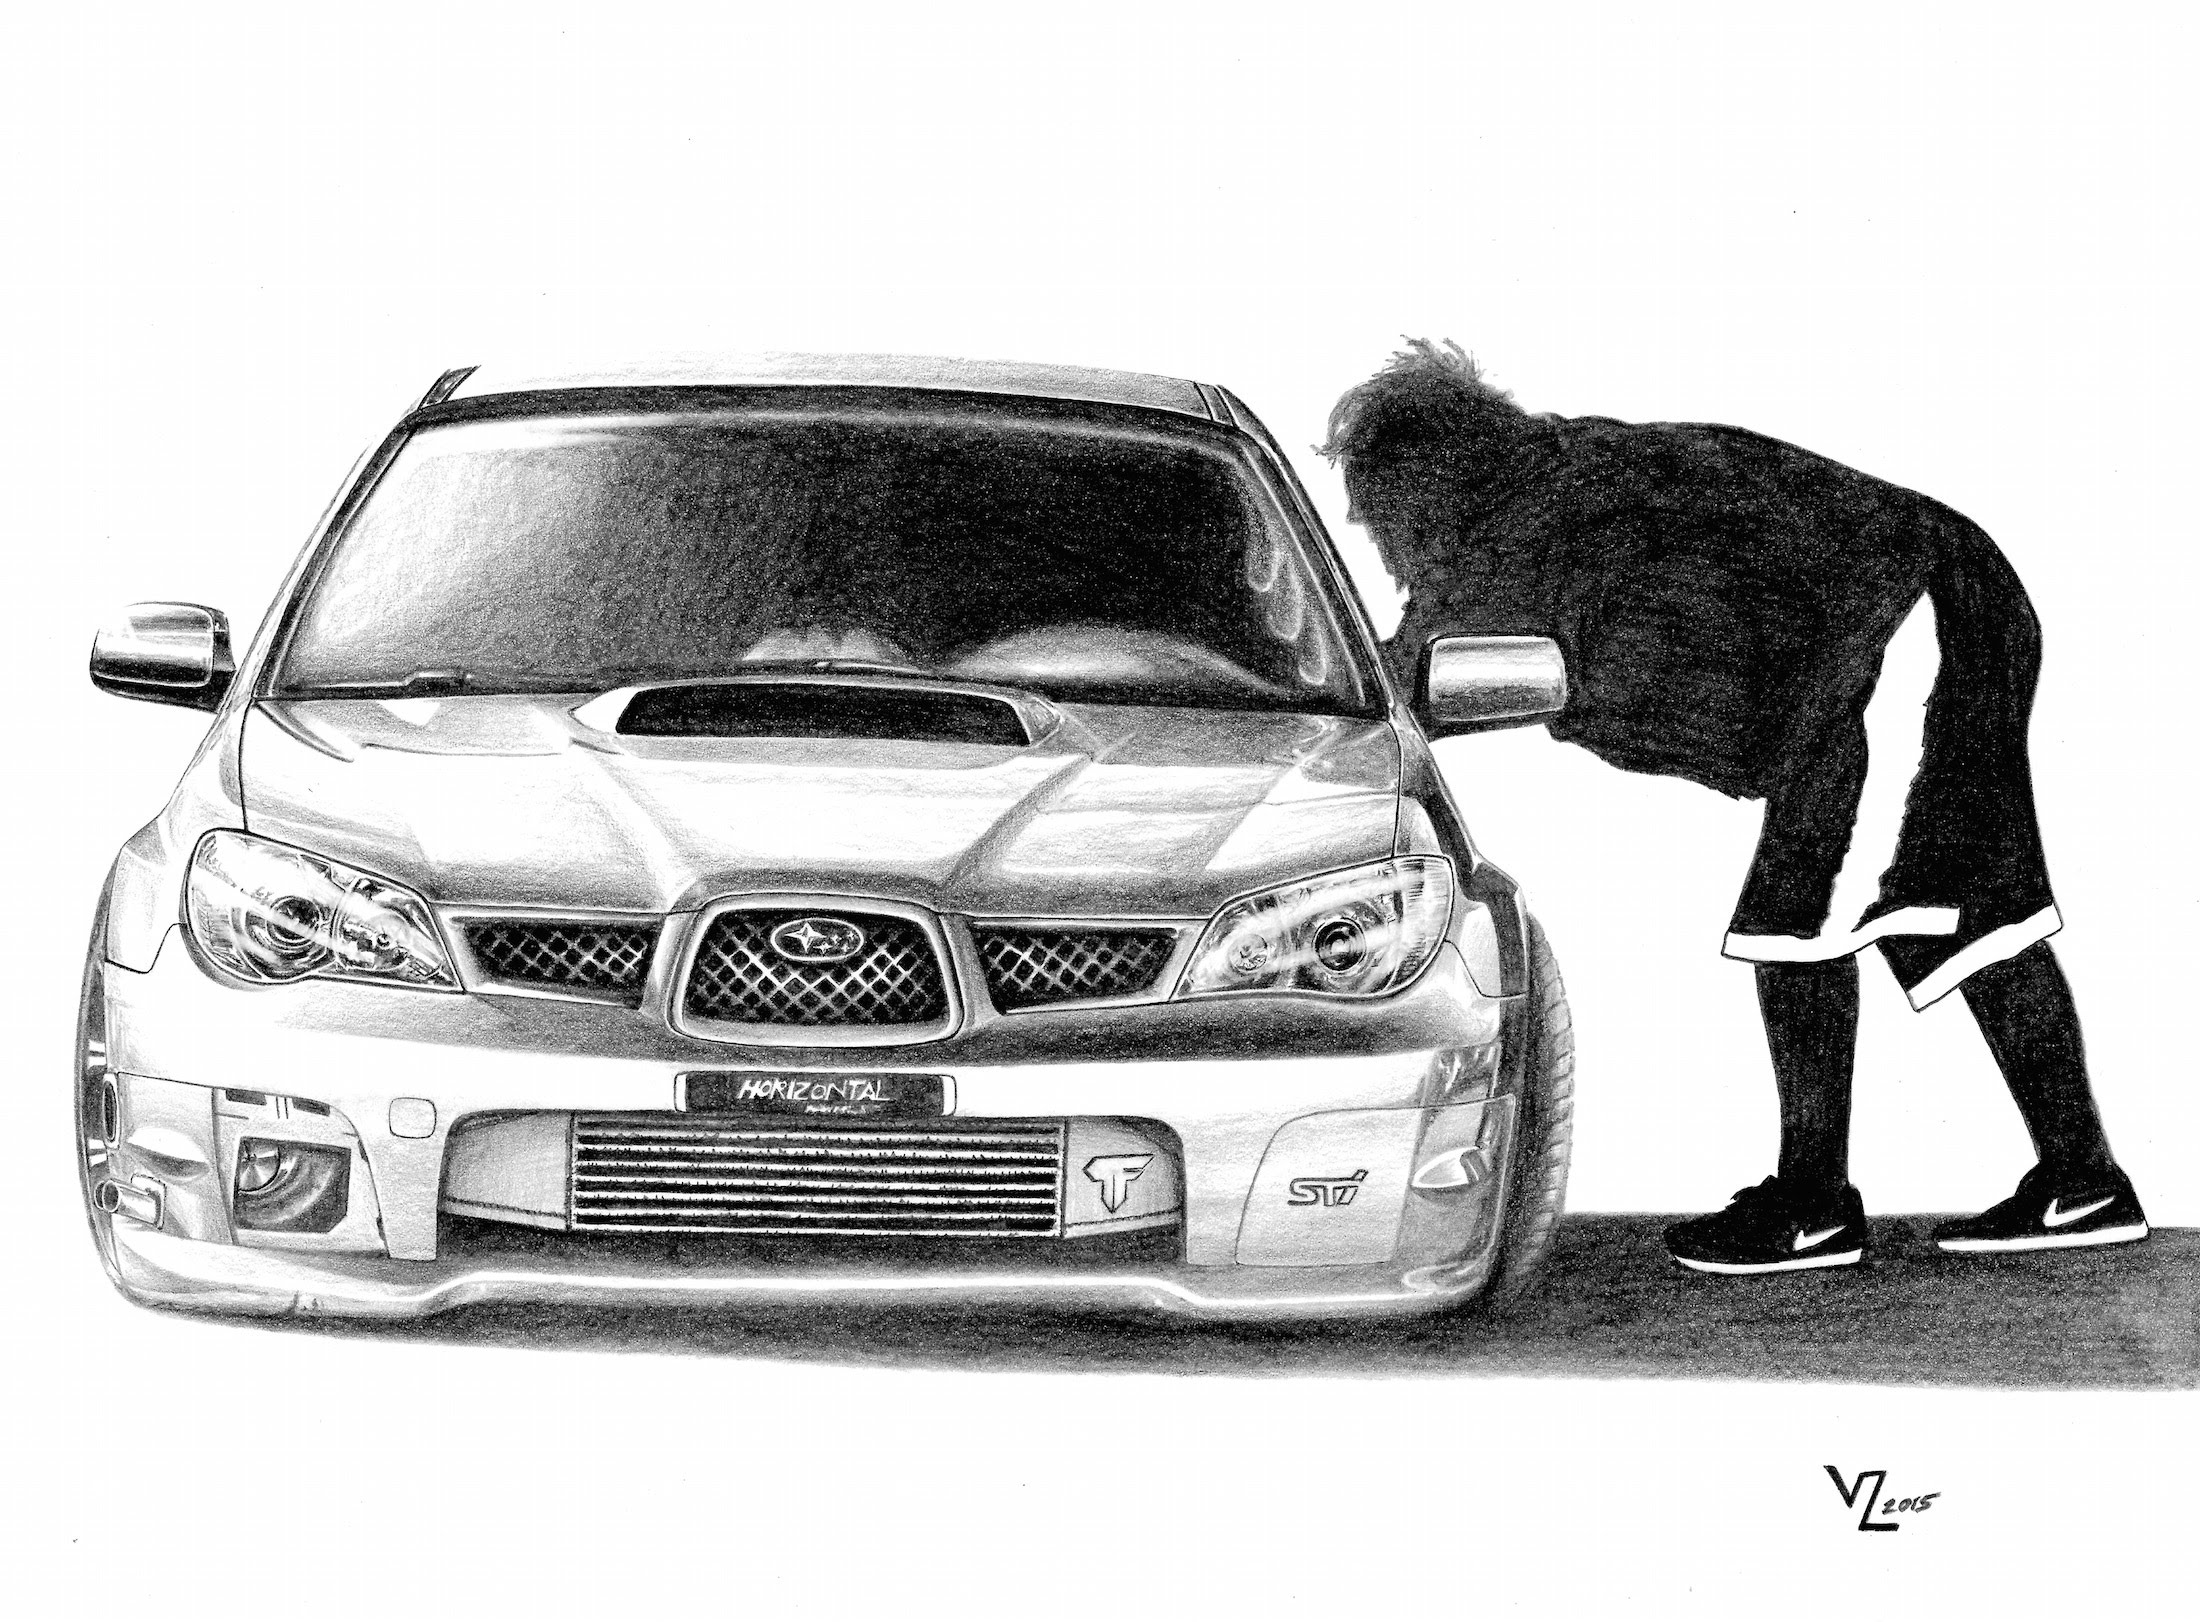 Jdm Car Drawings at PaintingValley.com | Explore ...